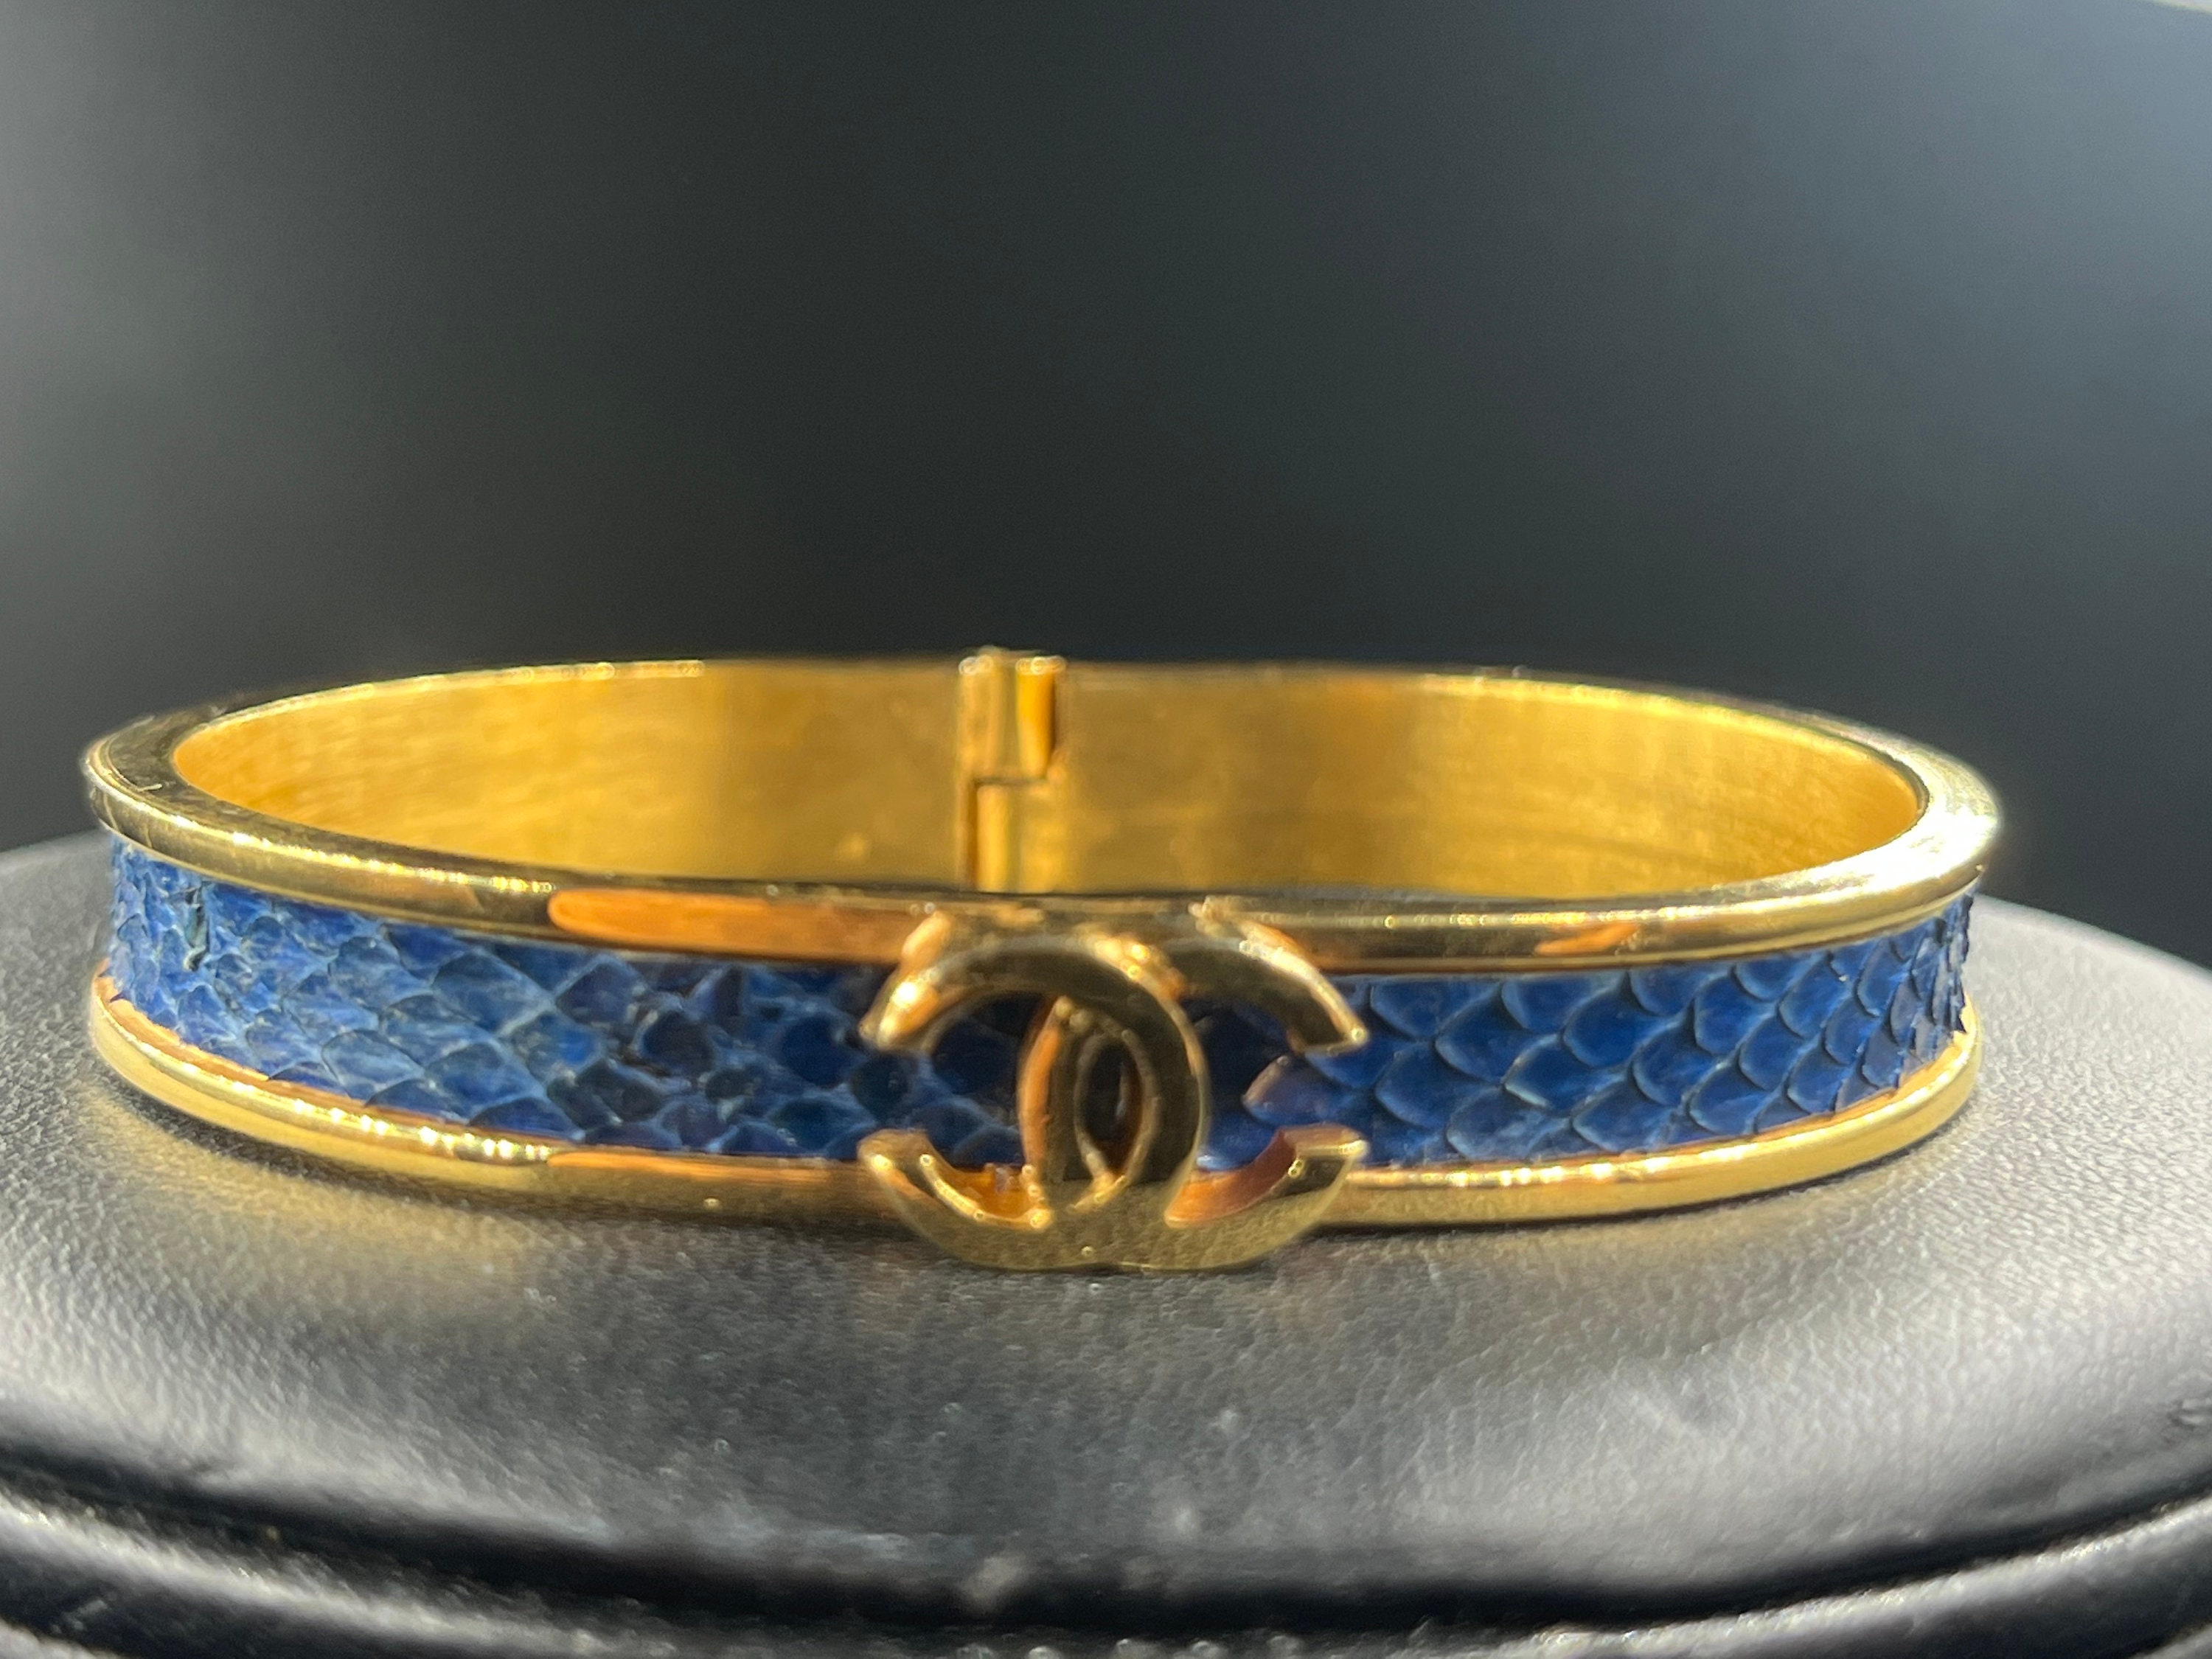 CHANEL Coco Mark Chain Leather 3 Row Bracelet Twist Lock Bangle Gold w/ Bag  | eBay